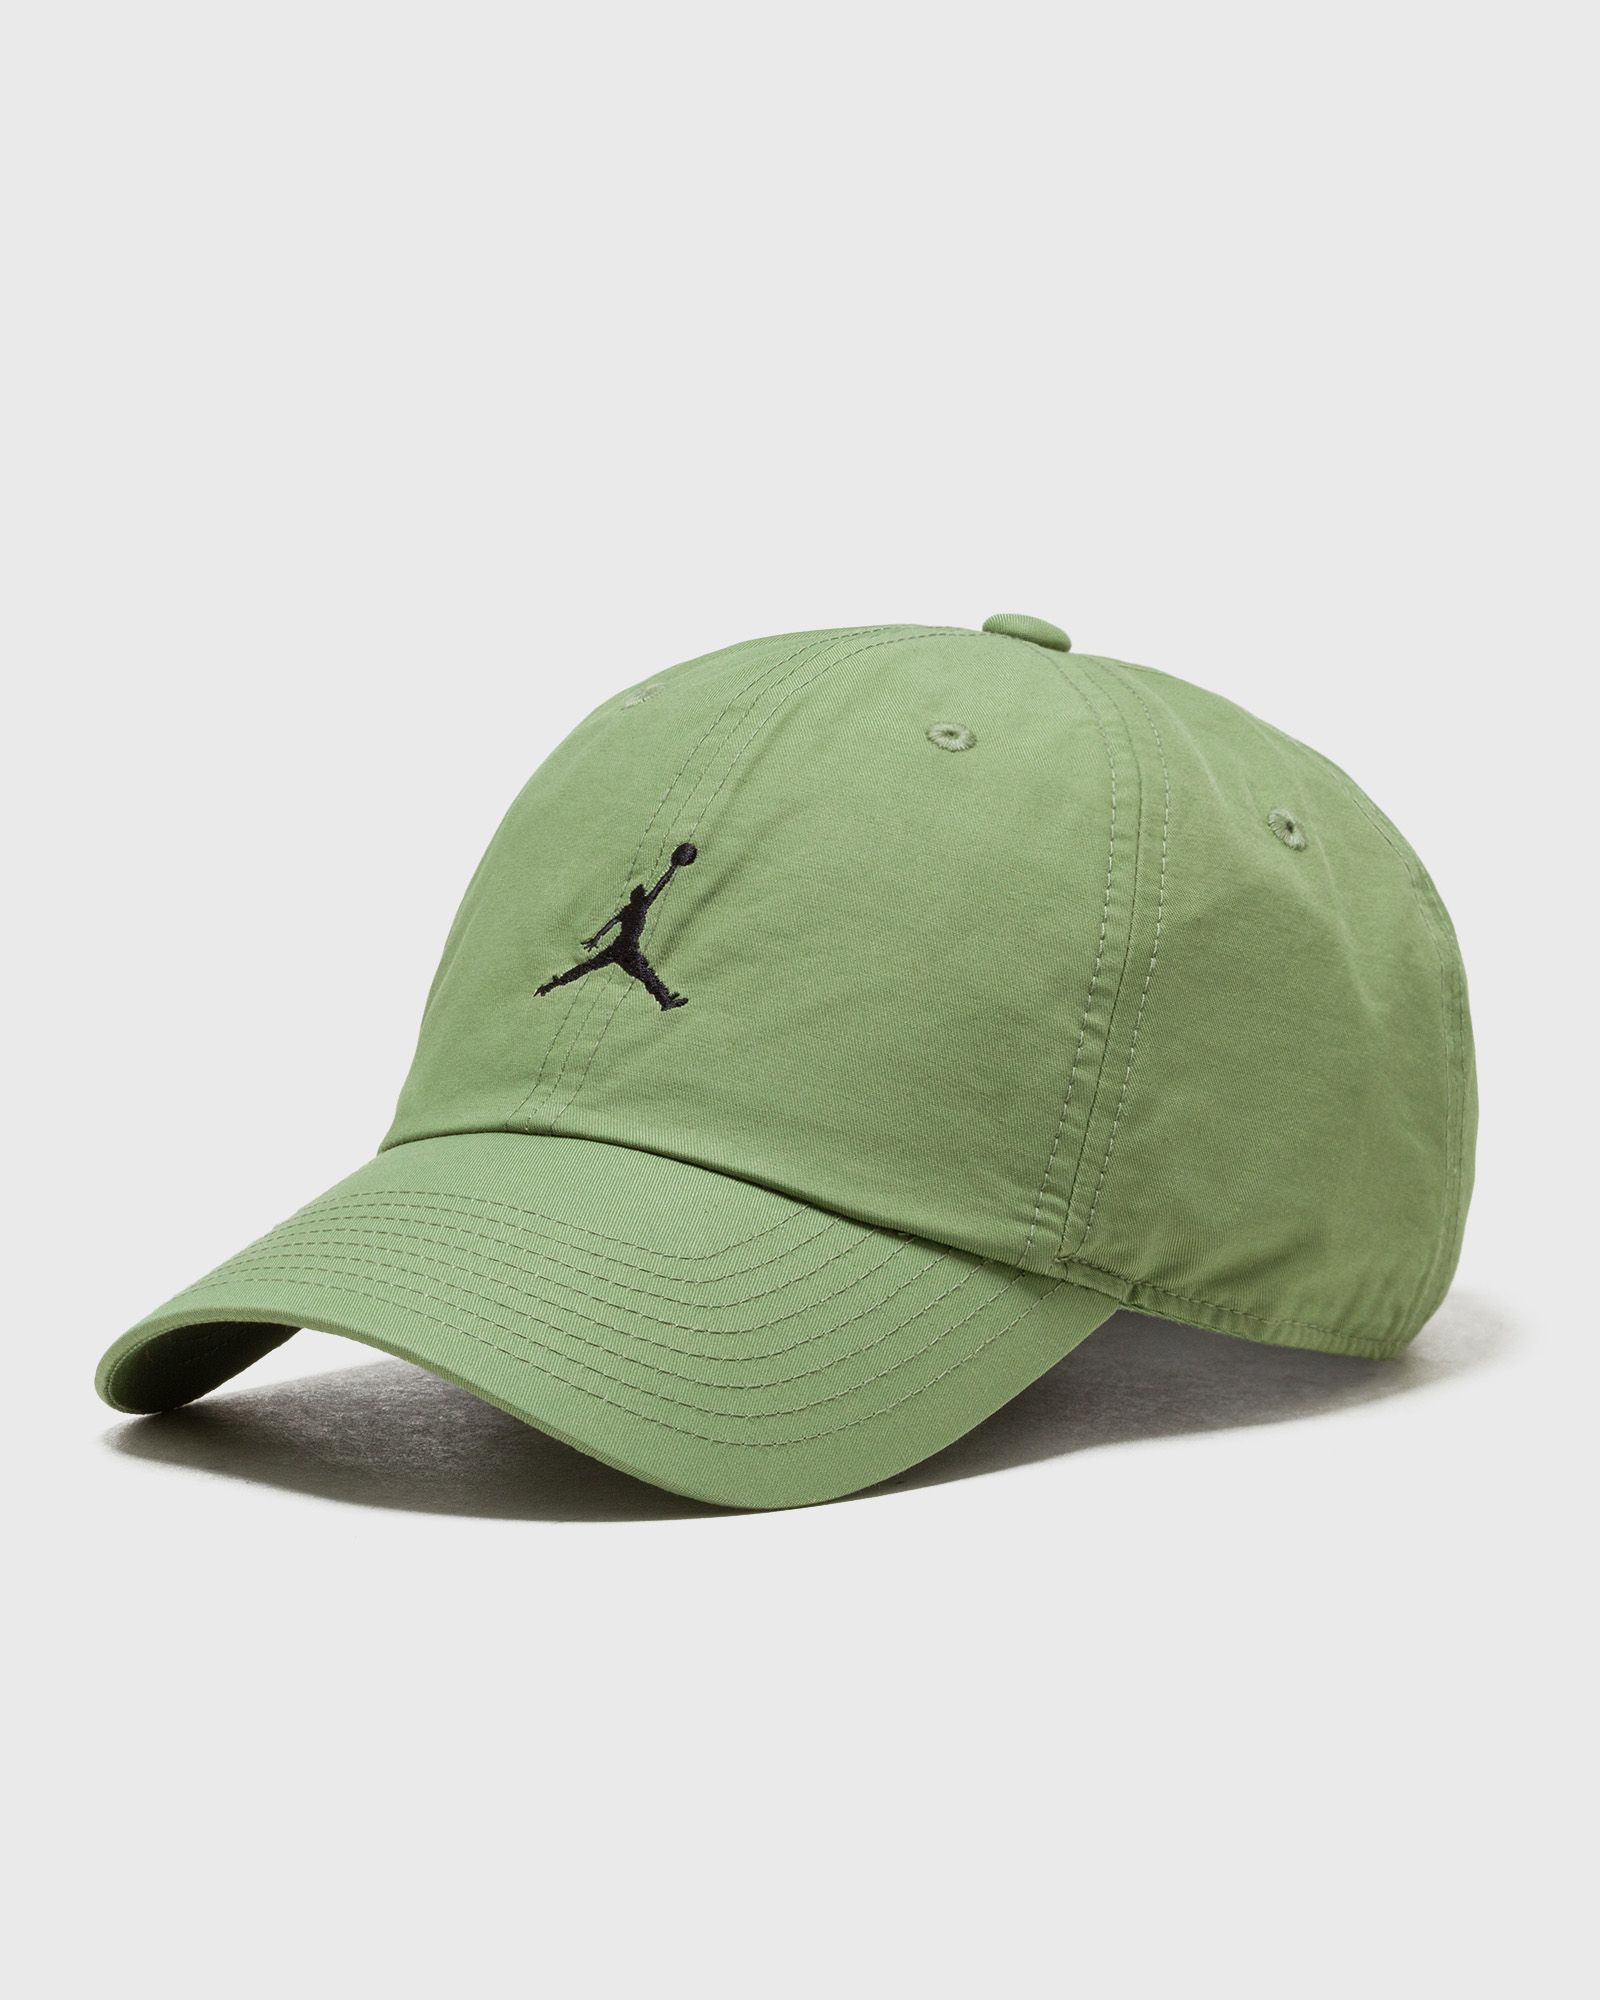 Jordan - club cap adjustable unstructured hat men caps green in größe:m/l